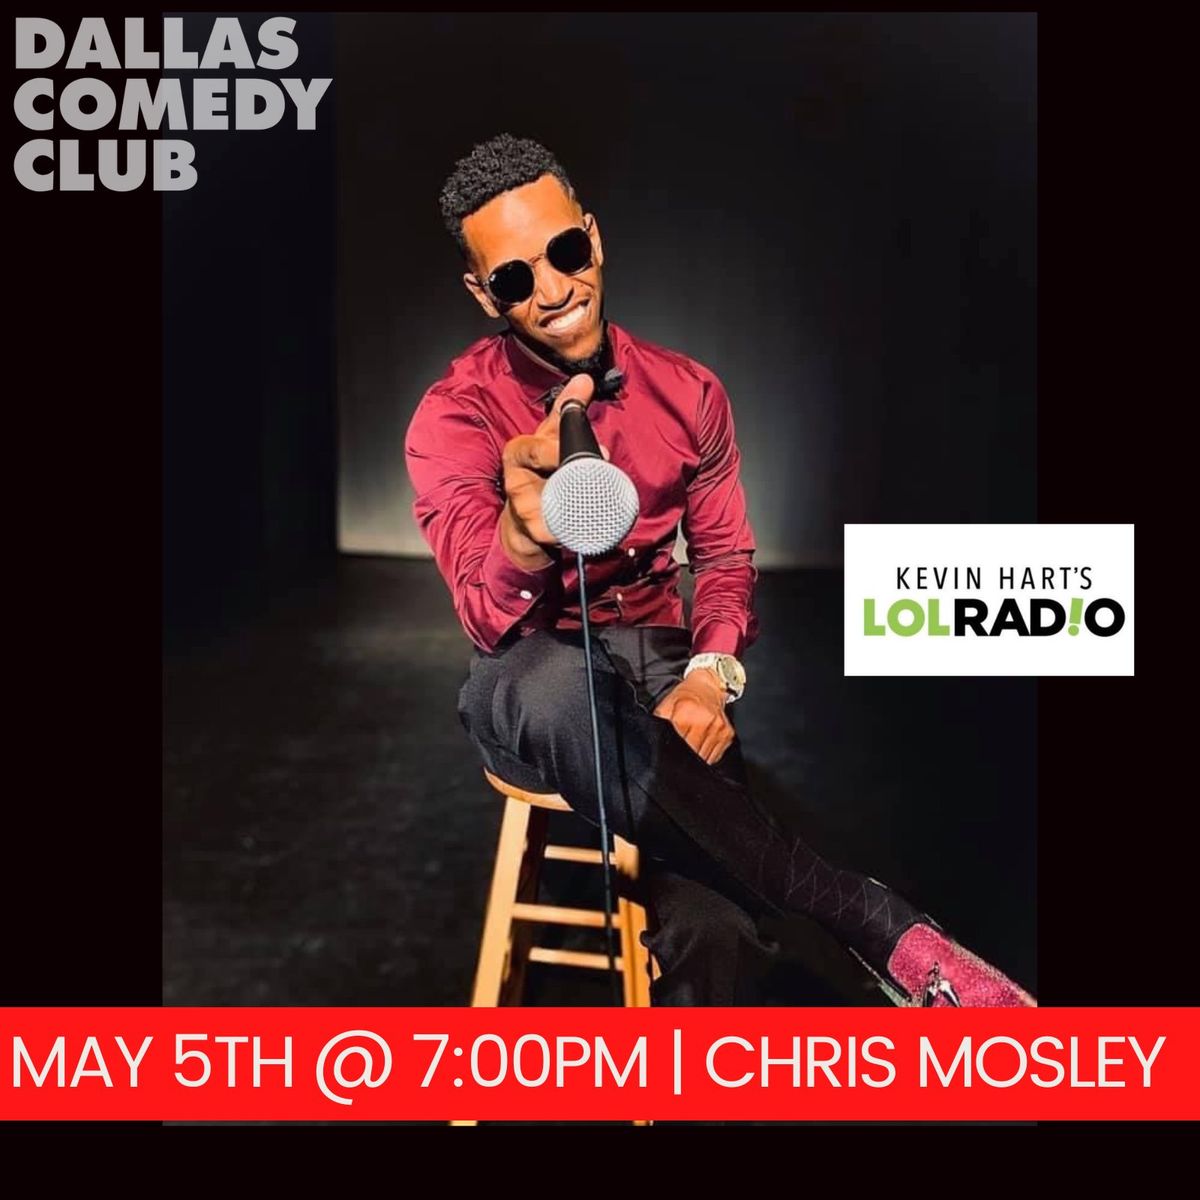 Dallas Comedy Club Presents: Chris Mosley